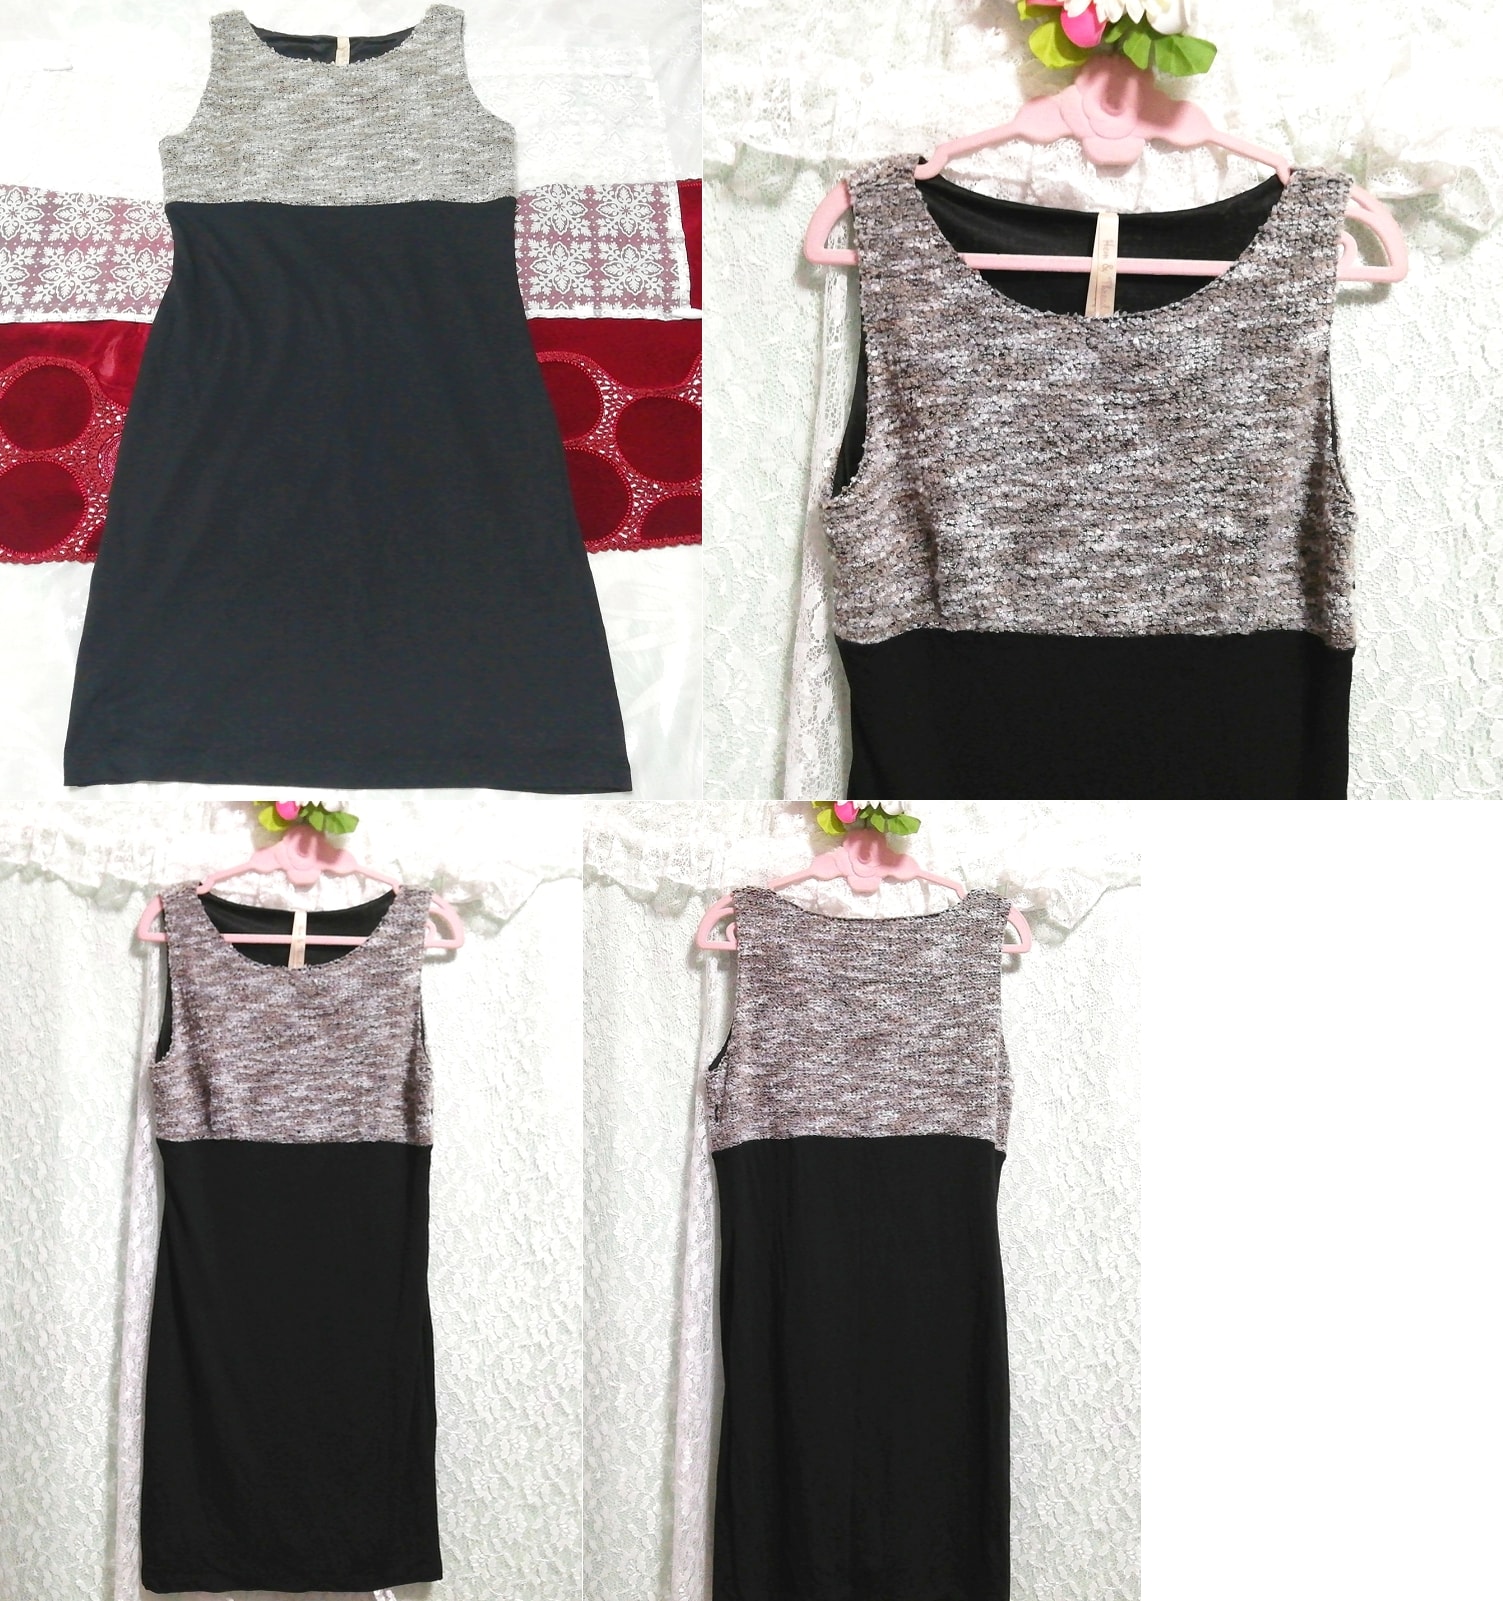 Ash tops black skirt sleeveless negligee nightgown dress, tunic, sleeveless, sleeveless, m size